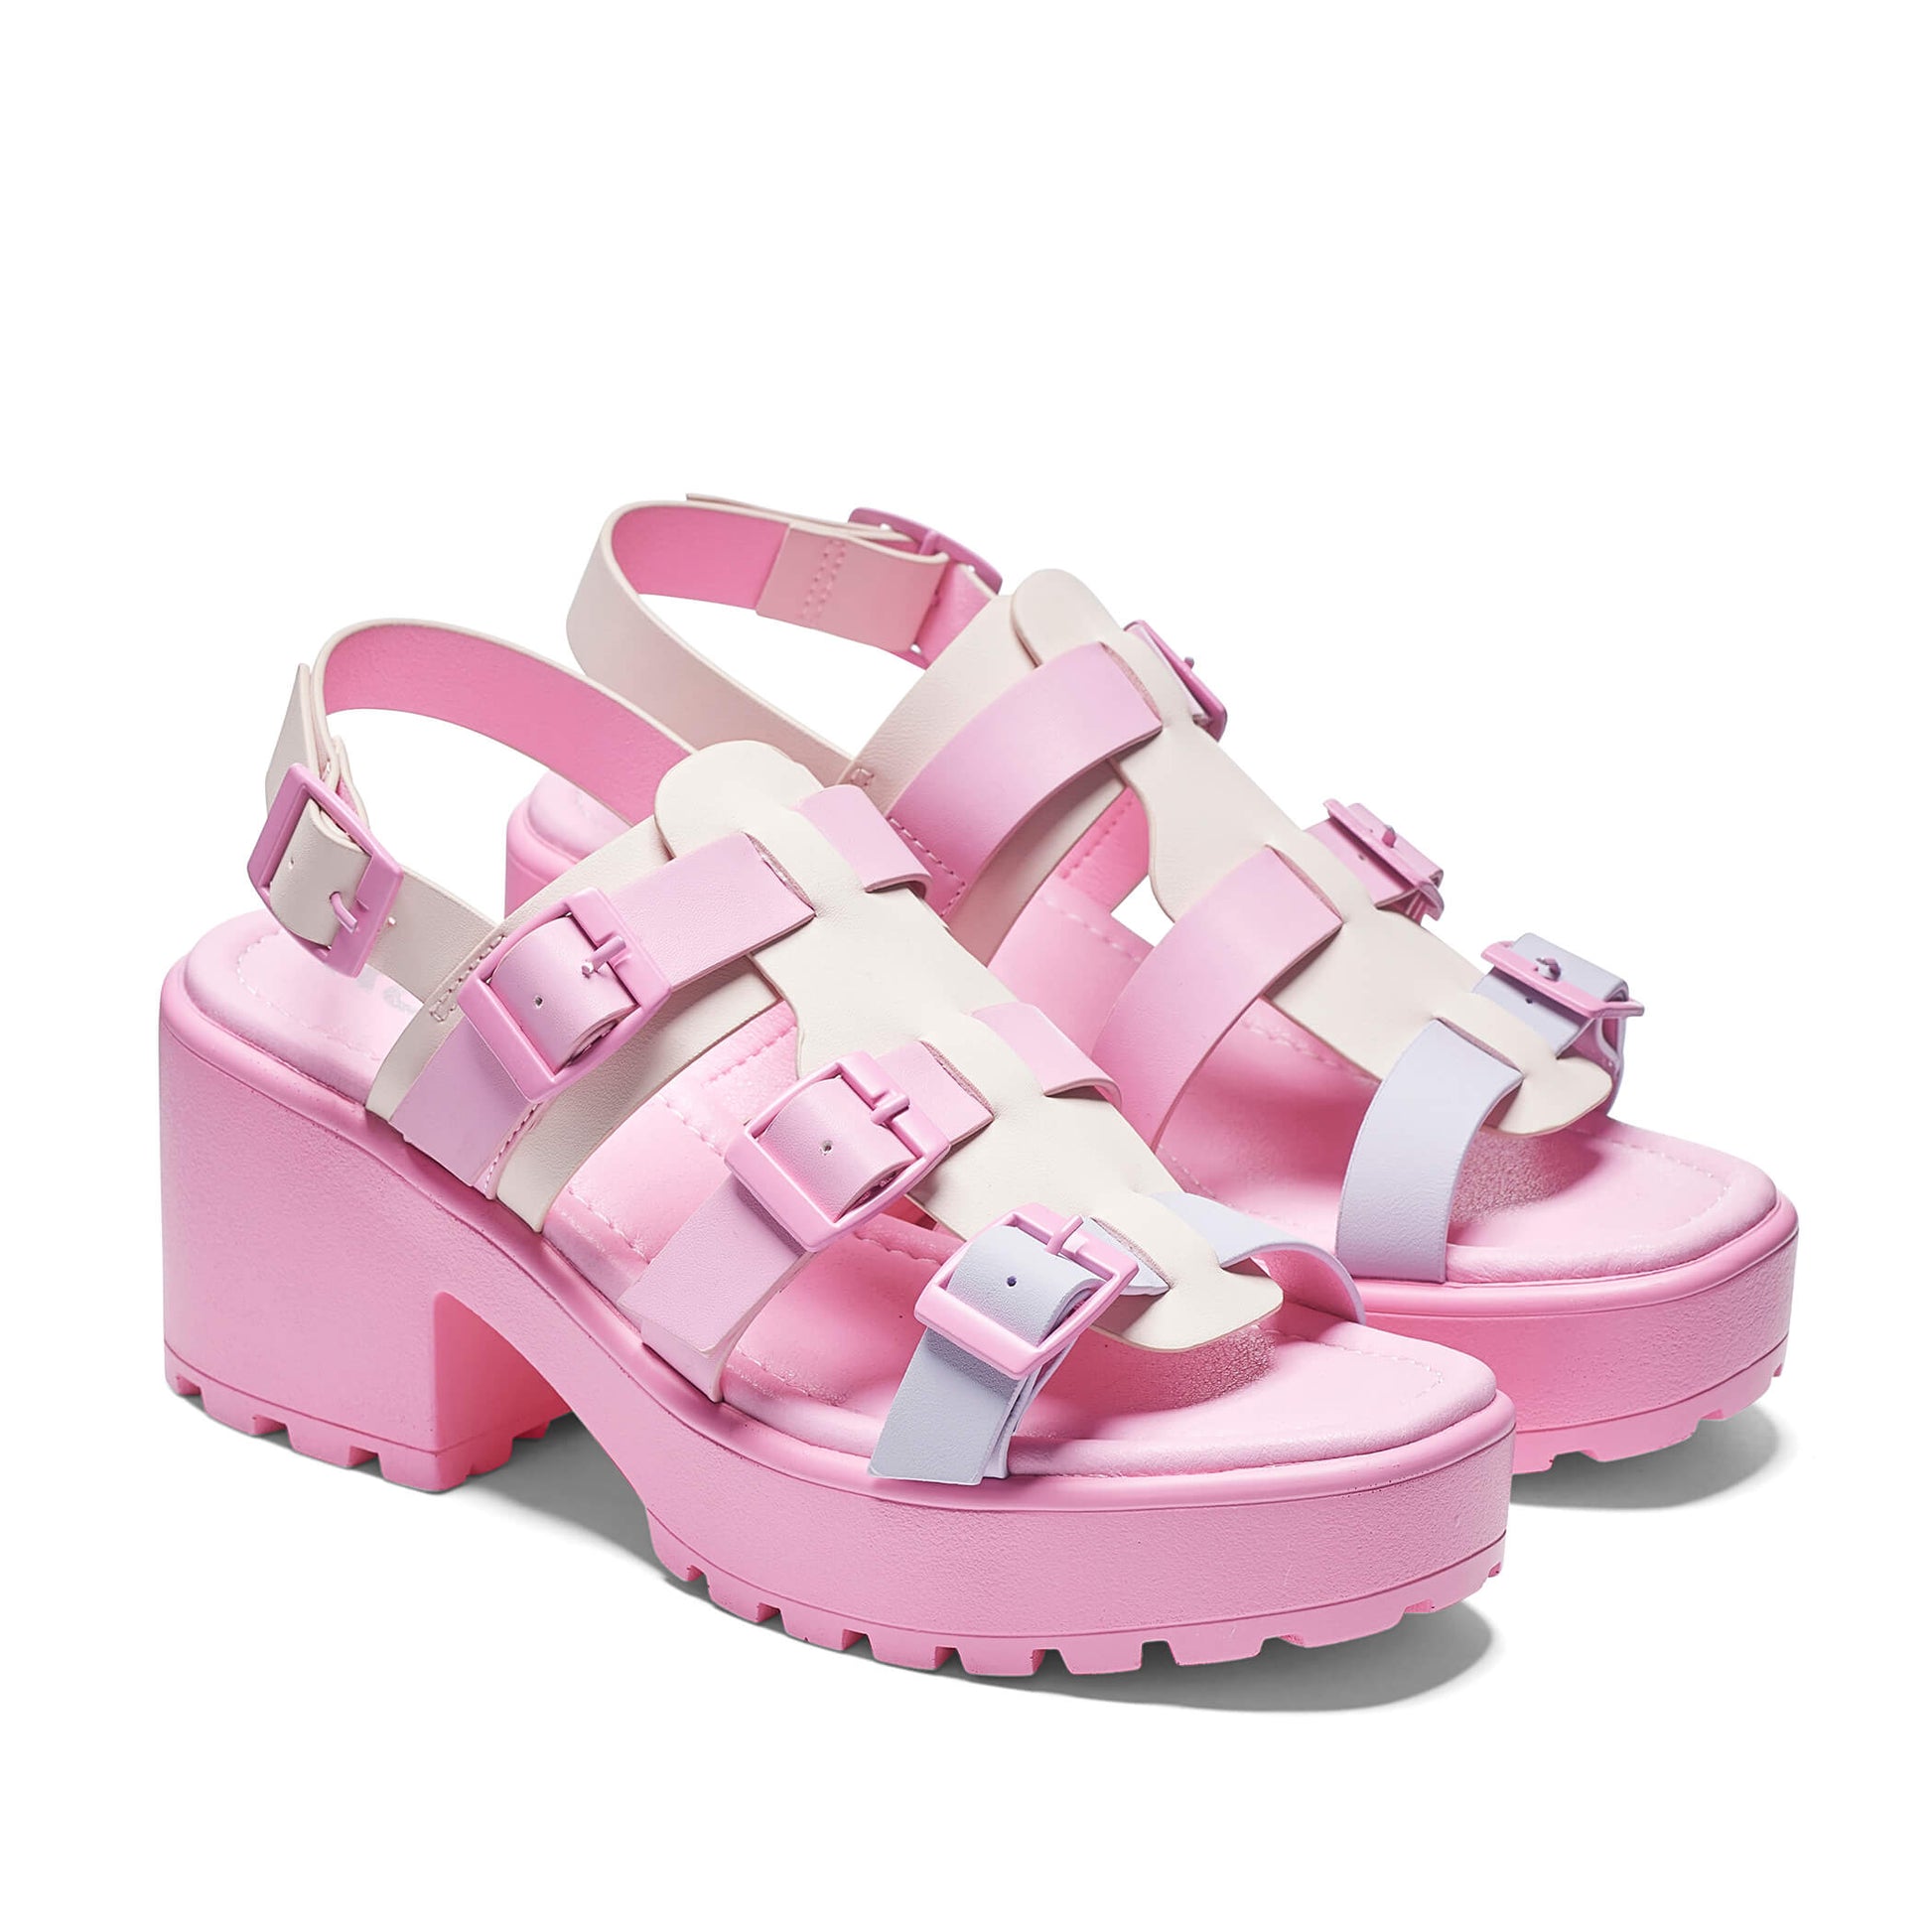 Sugar Season Chunky Buckle Sandals - Pink - Sandals - KOI Footwear - Pink - Three-Quarter View